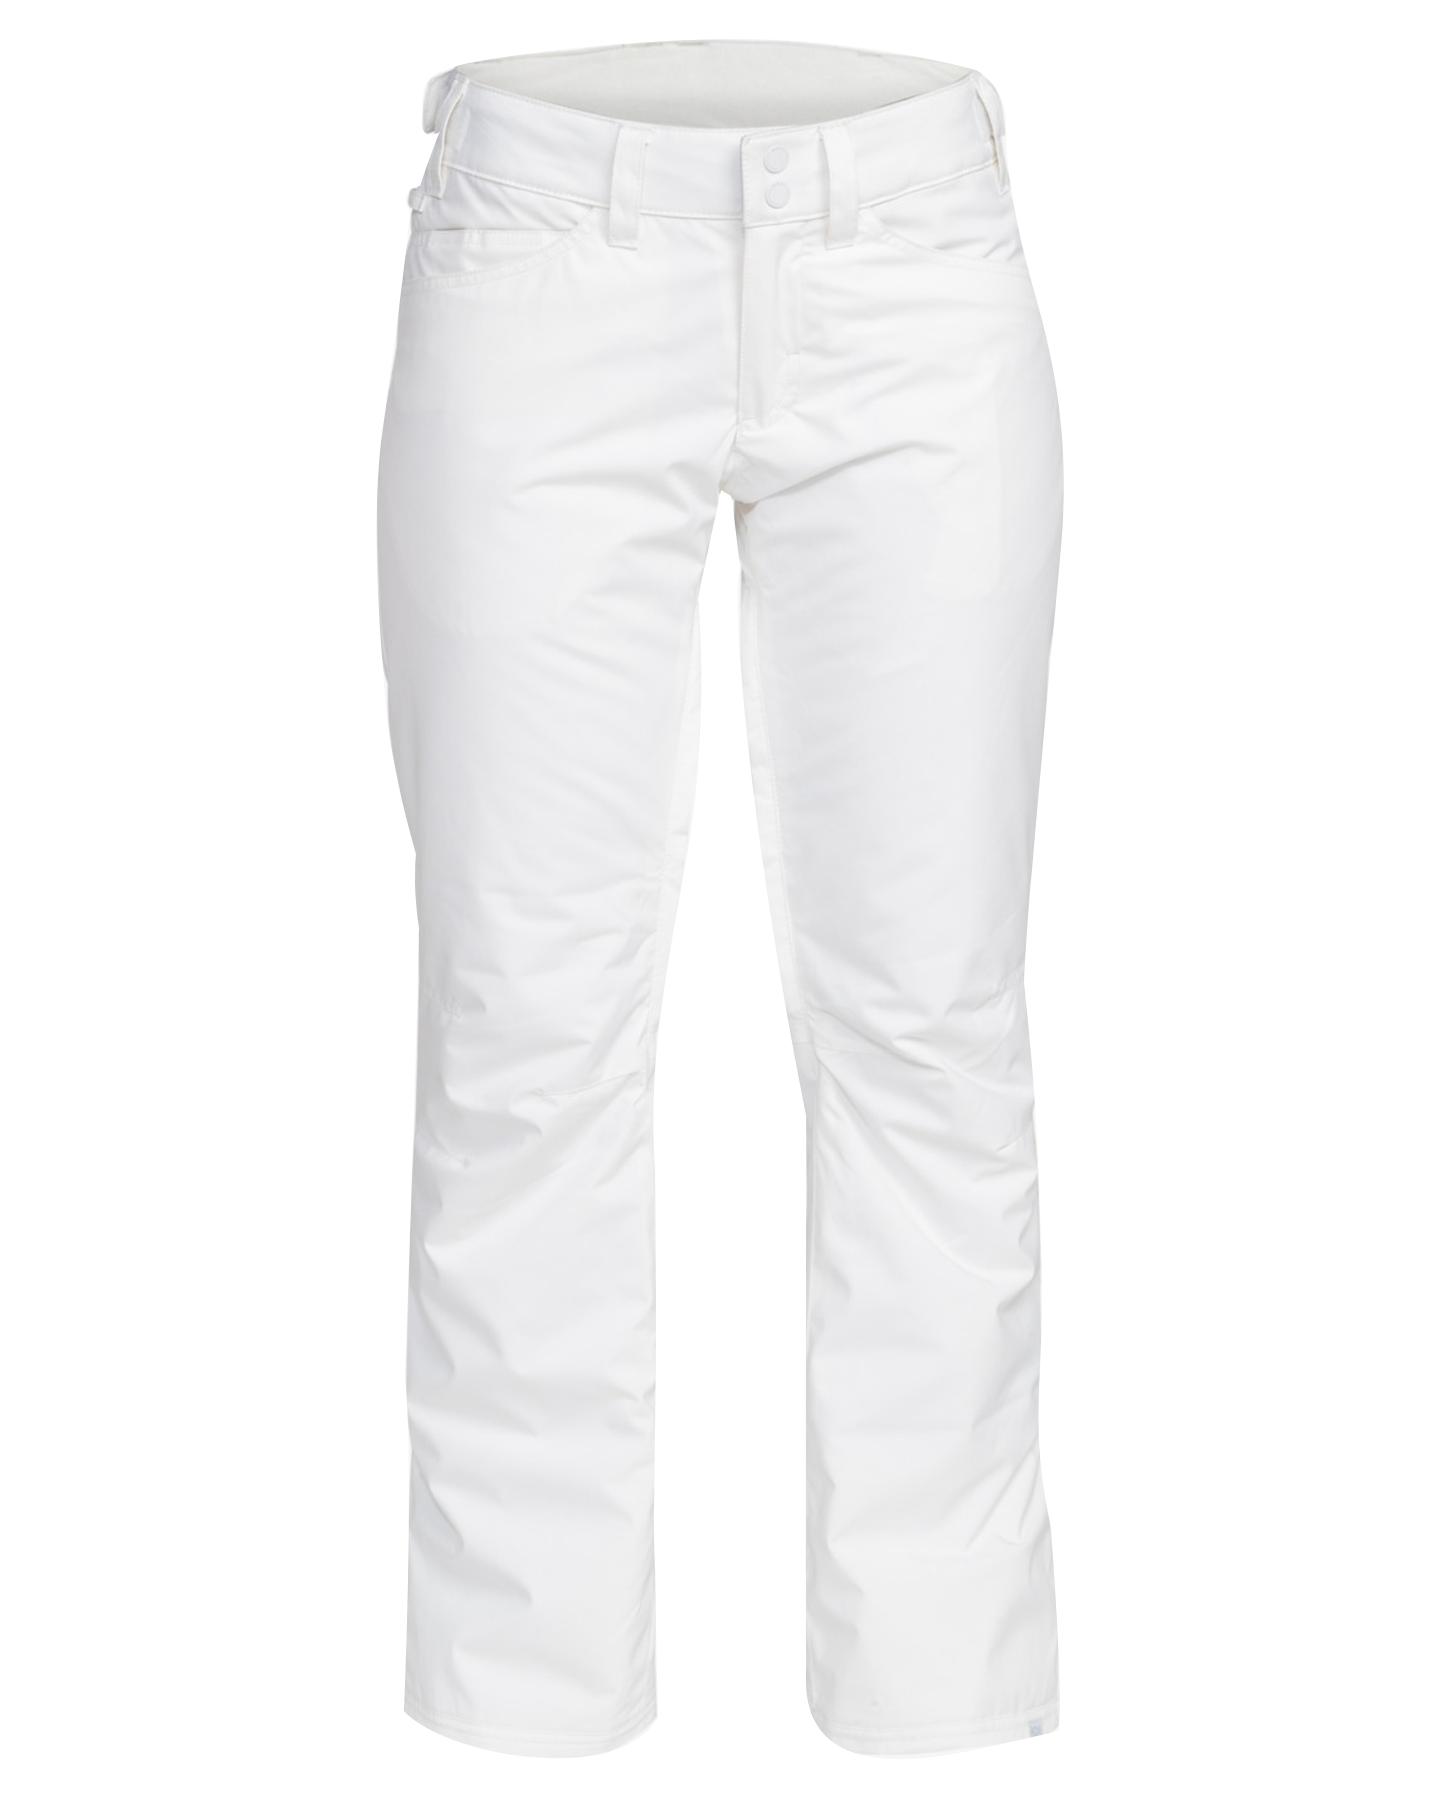 Roxy Women's Backyard Technical Snow Pants - Bright White Women's Snow Pants - SnowSkiersWarehouse